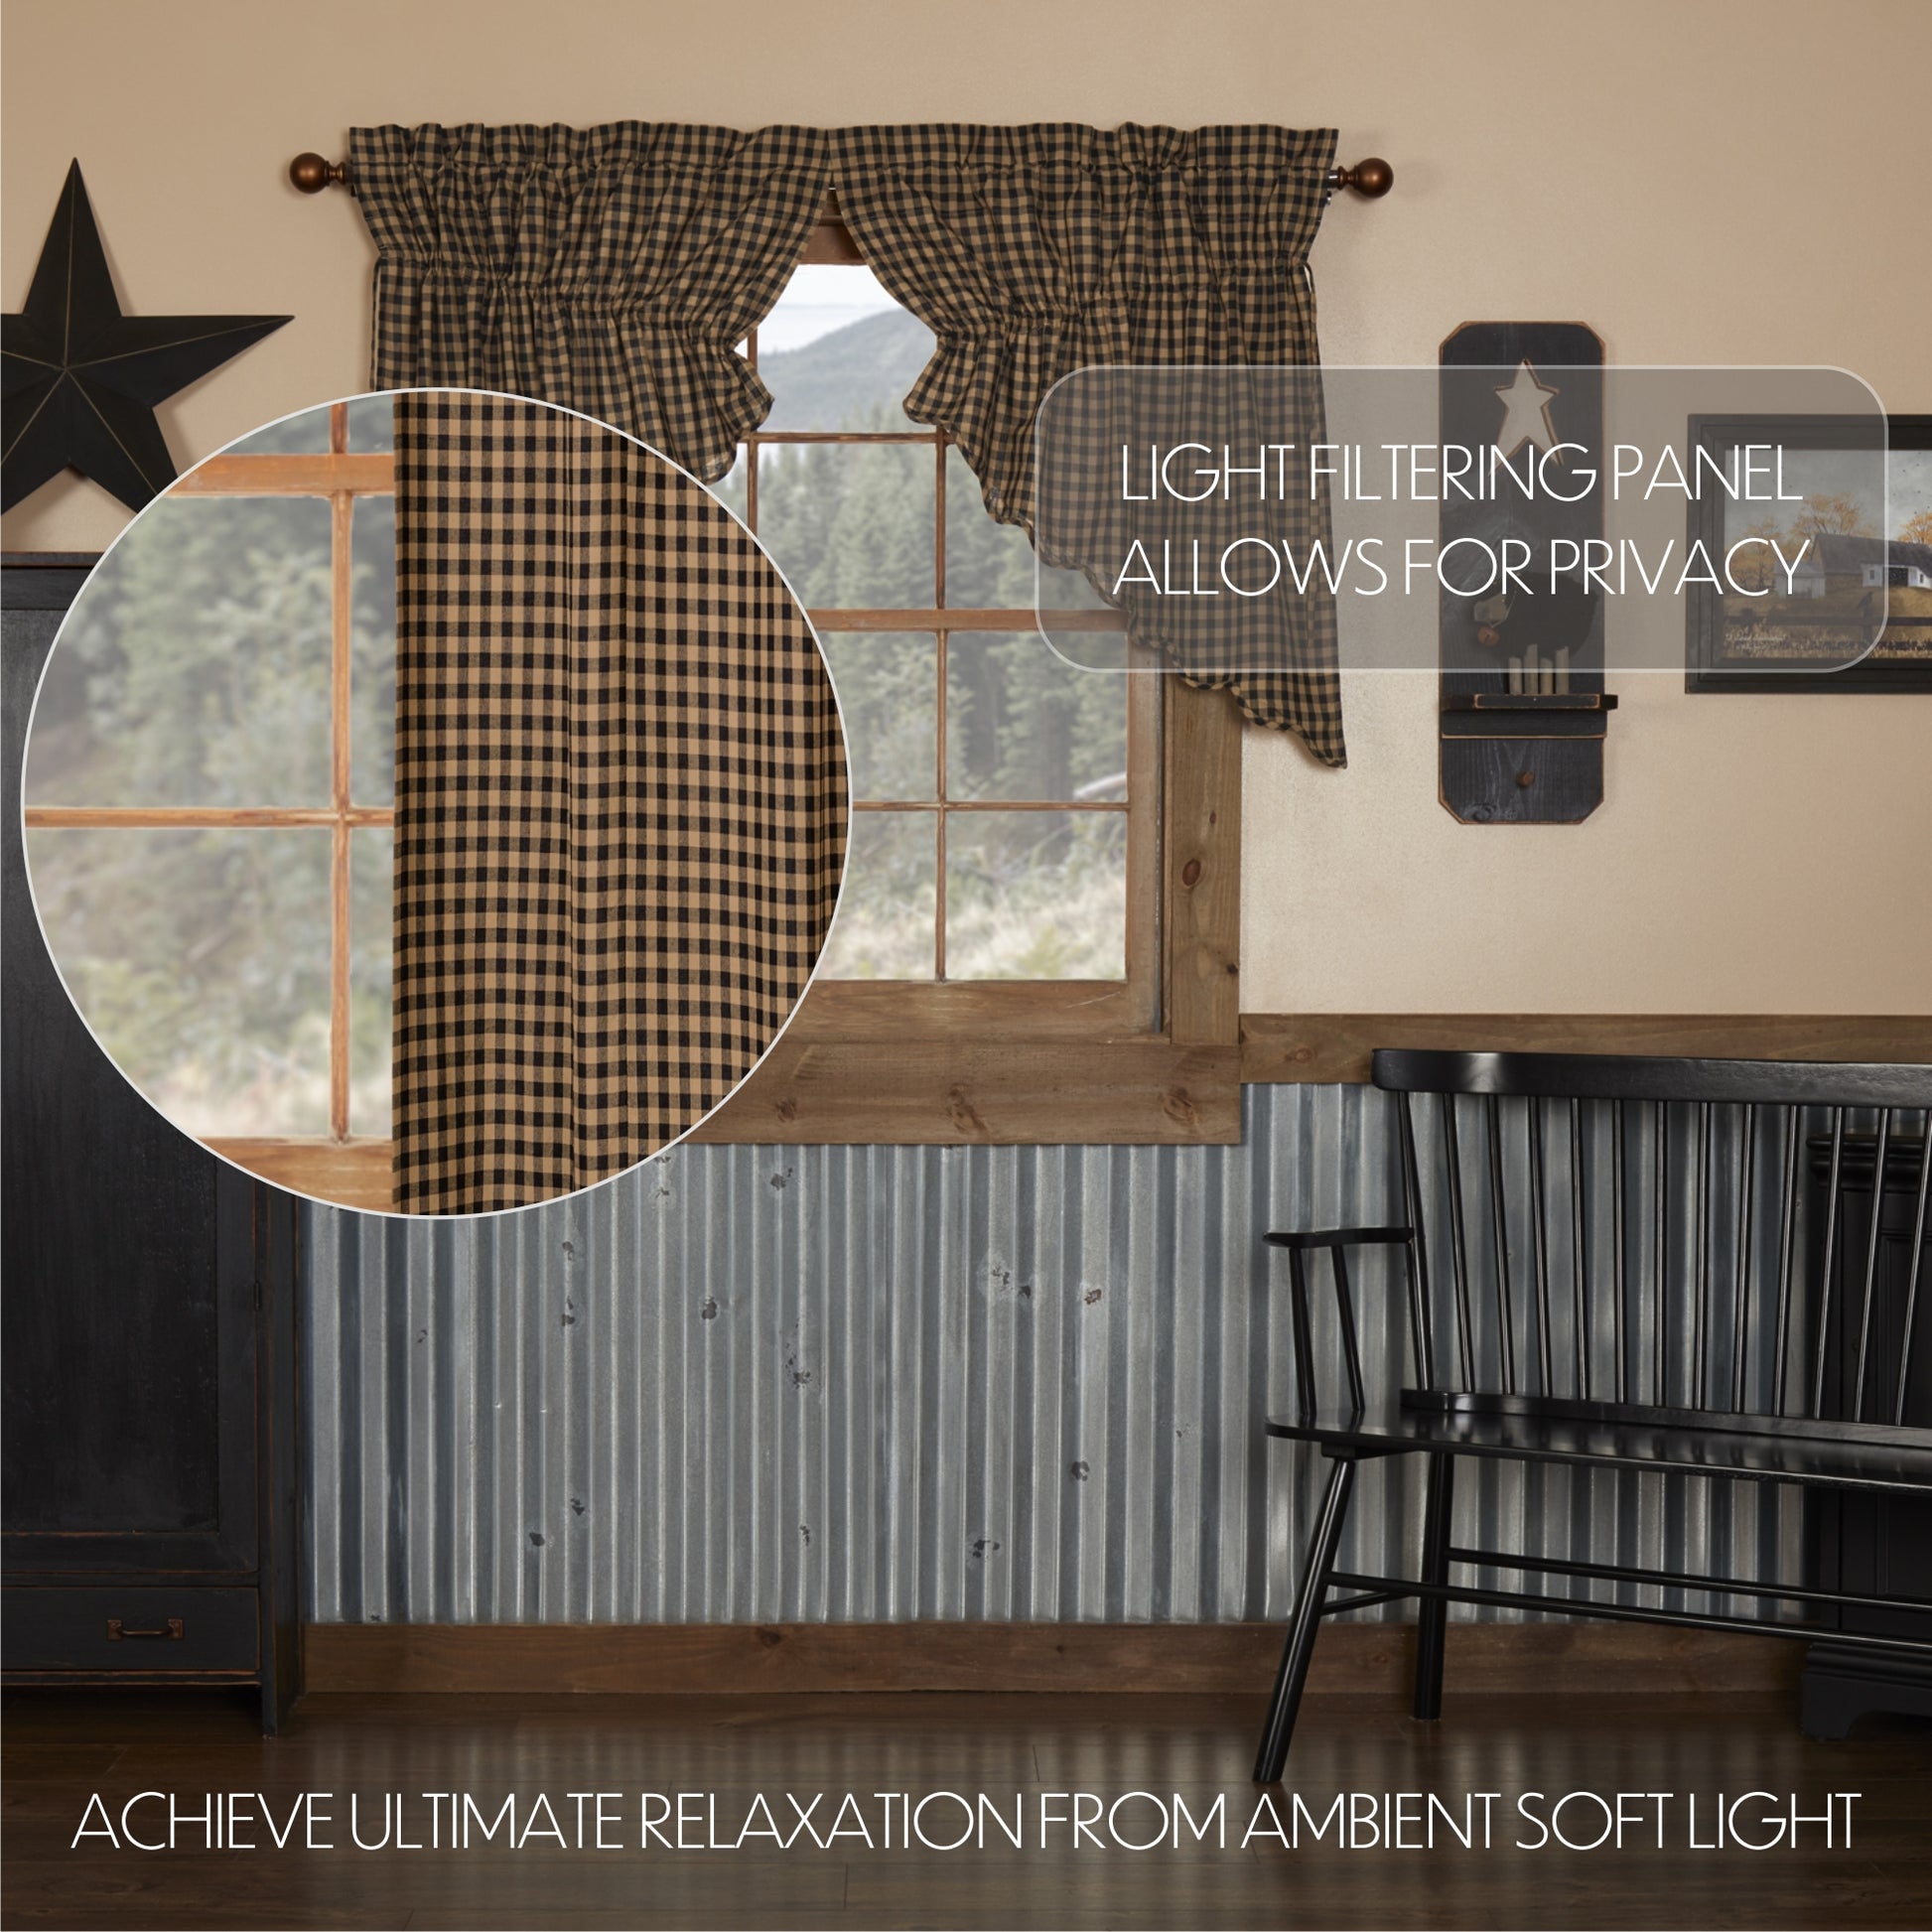 Farmhouse Tier Set Woven Plaid Textured Cotton Cafe Kitchen Curtains V –  VHC Brands Home Decor